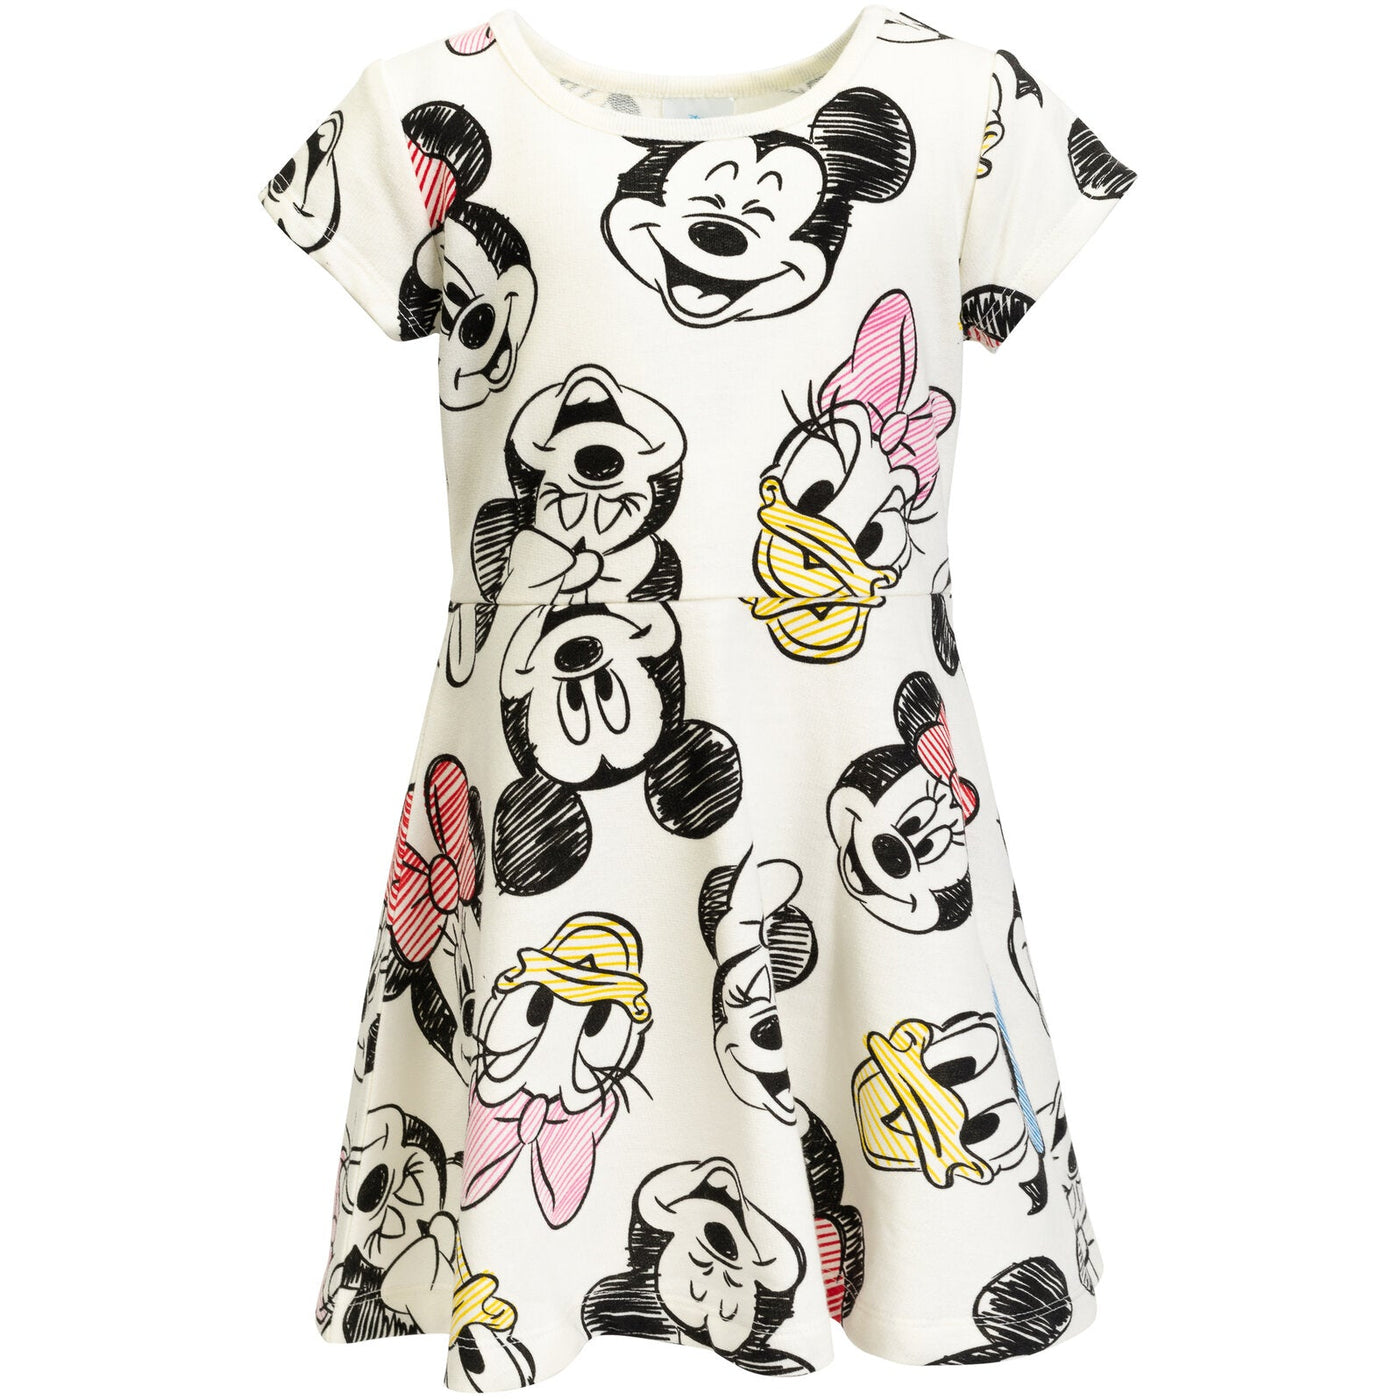 Disney Mickey & Friends Dress - imagikids